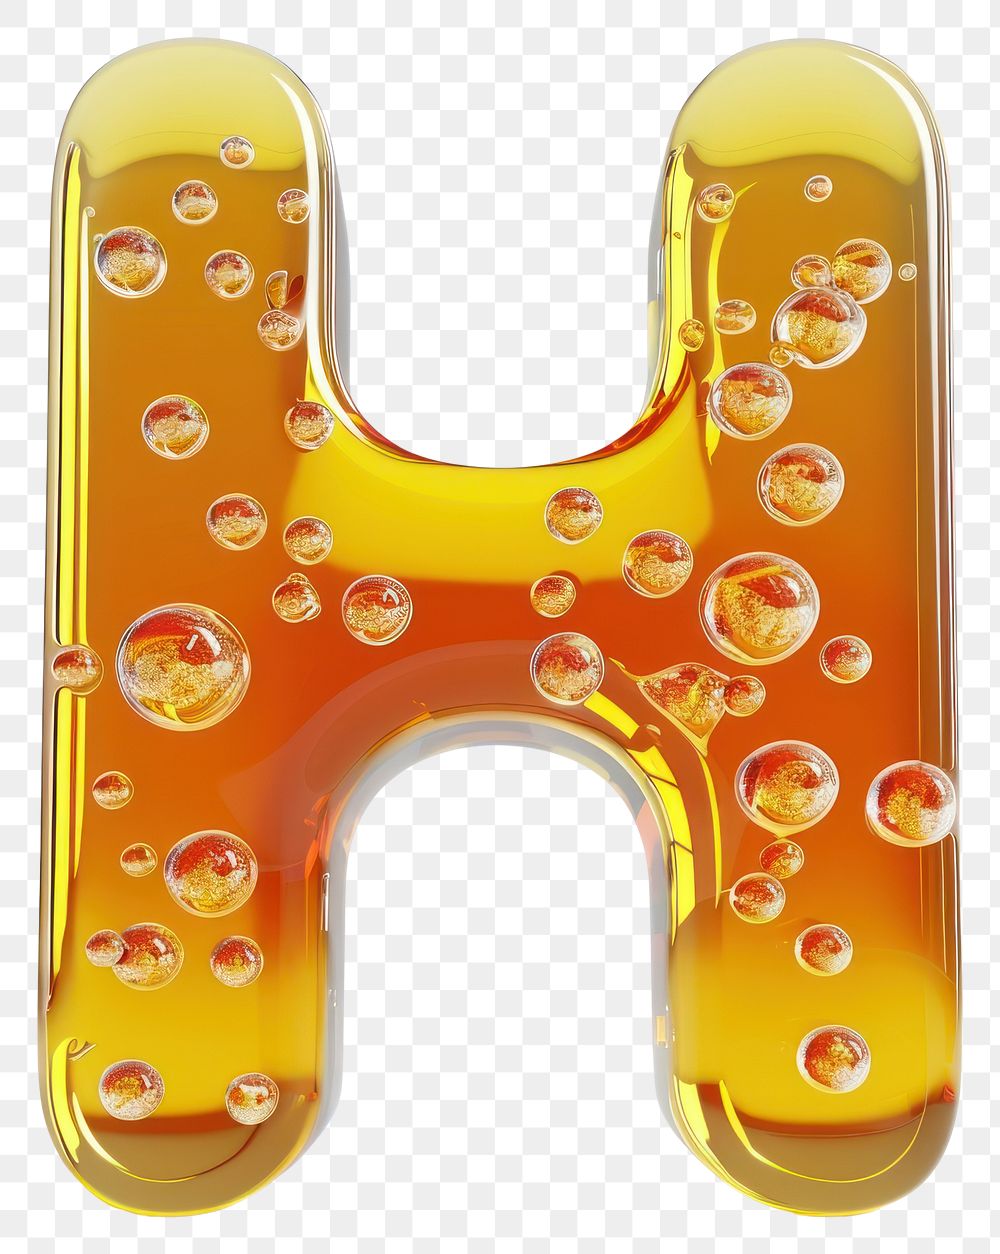 Letter H yellow bubble symbol.